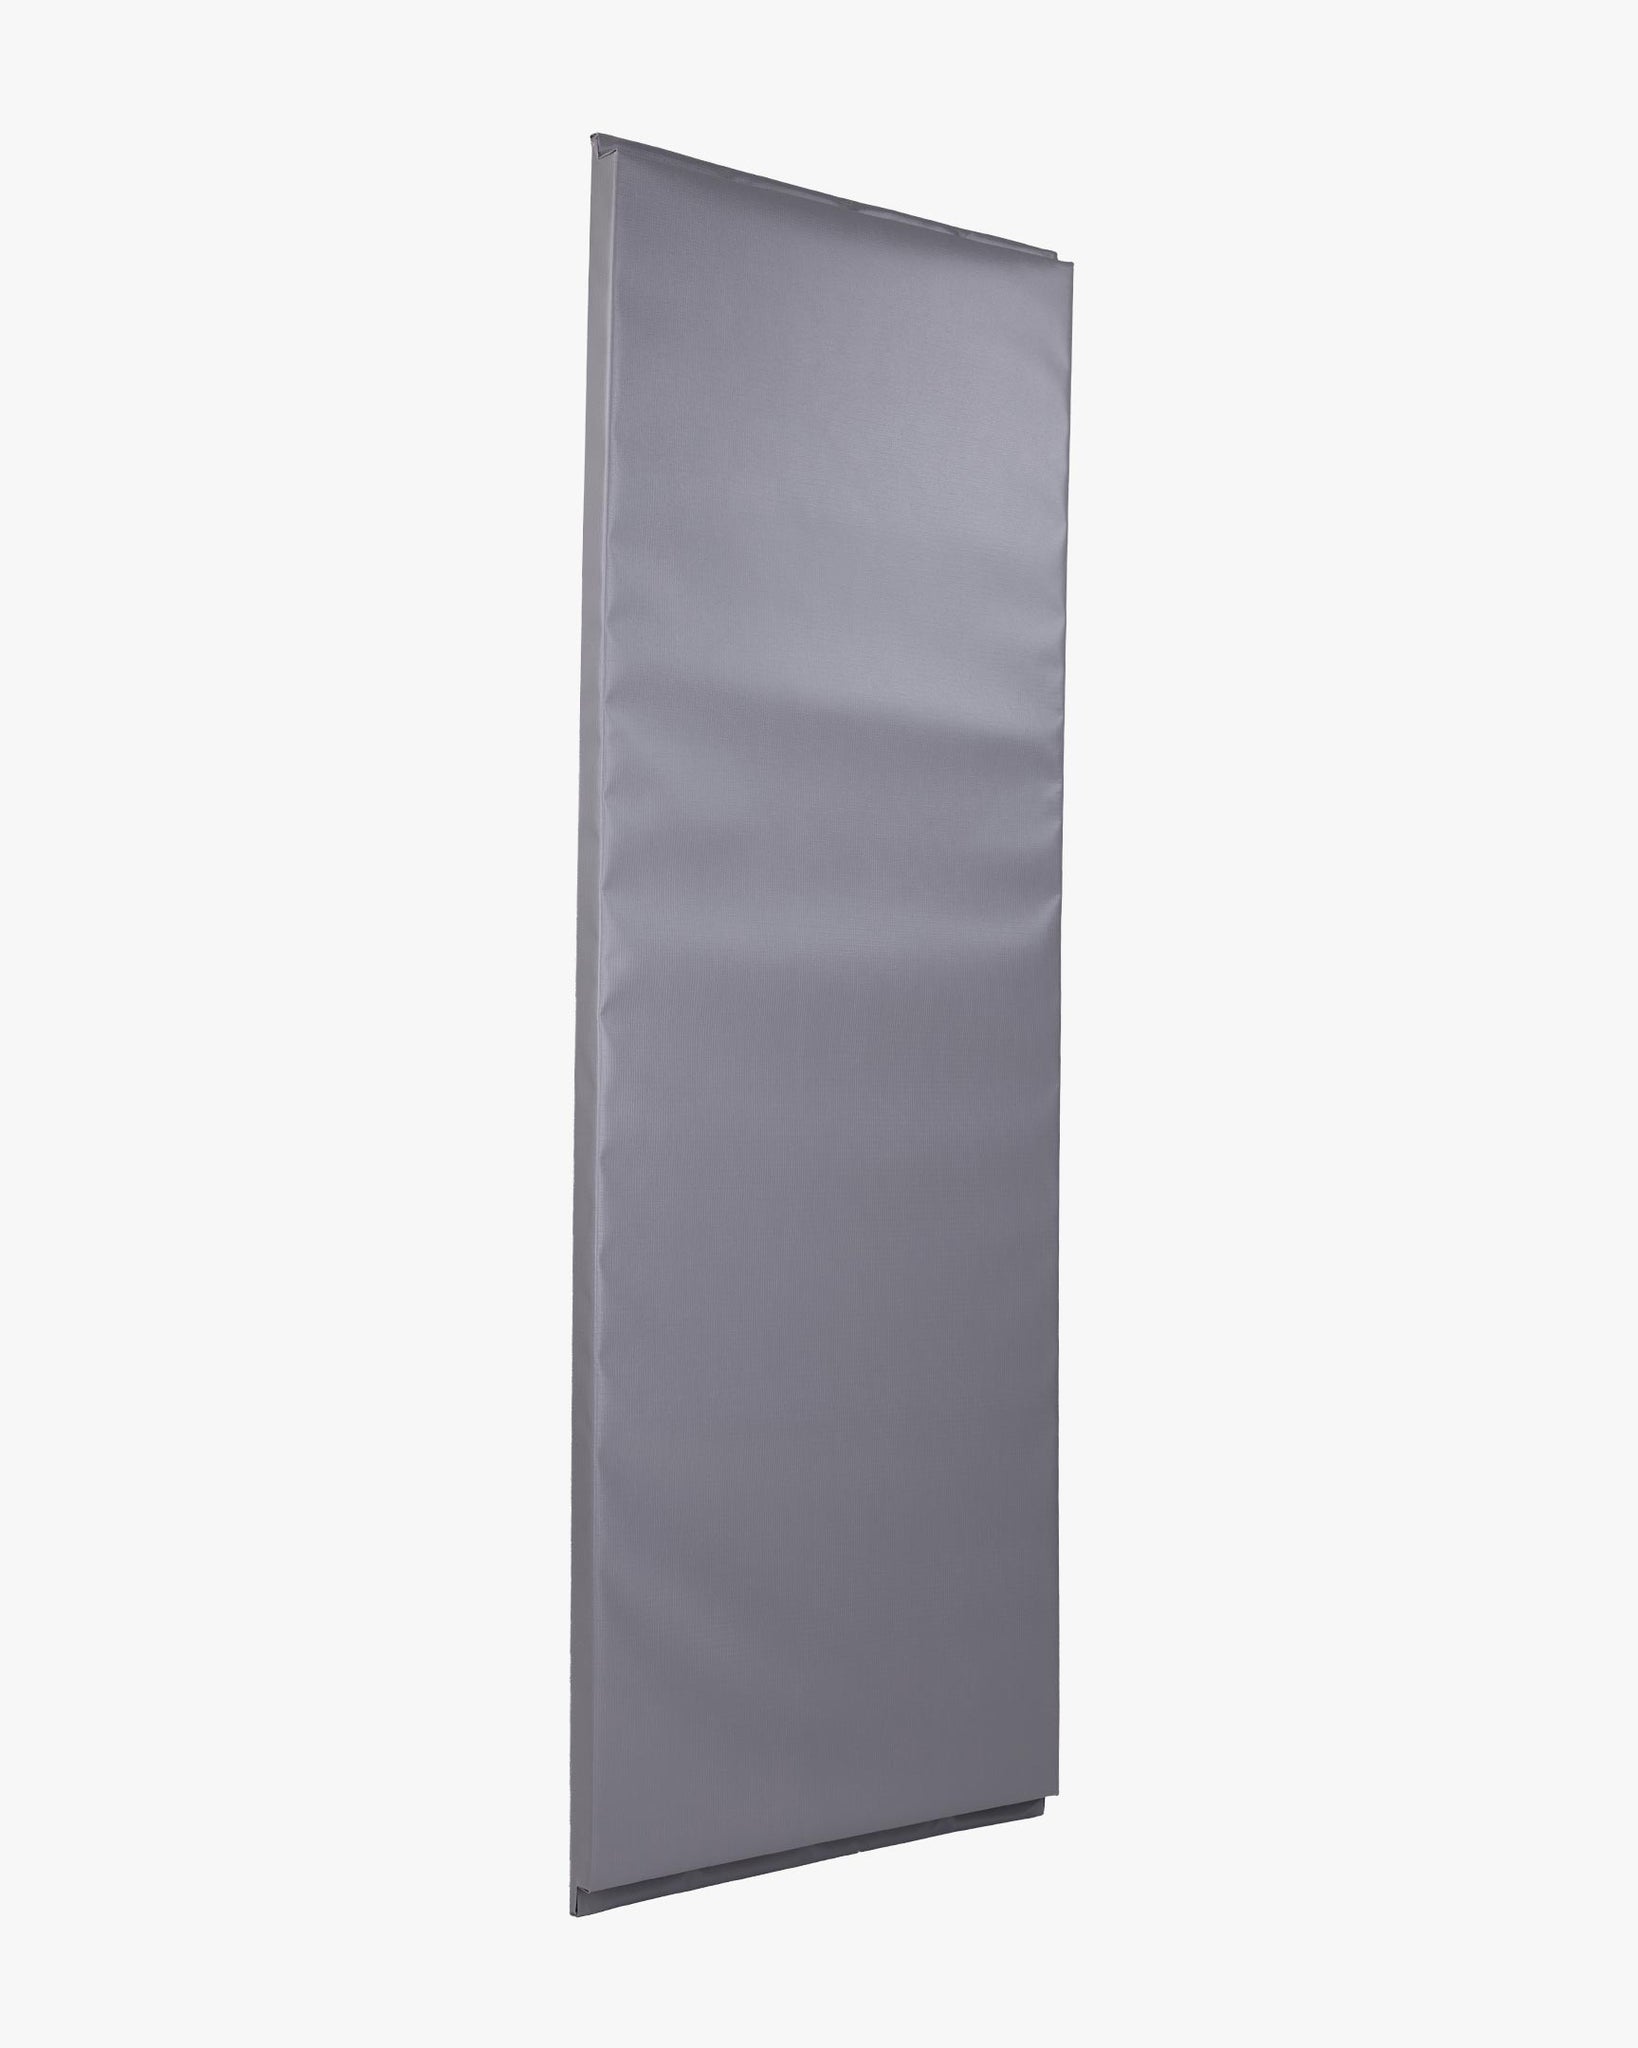 2' X 6' Wall Pad Galaxy Grey